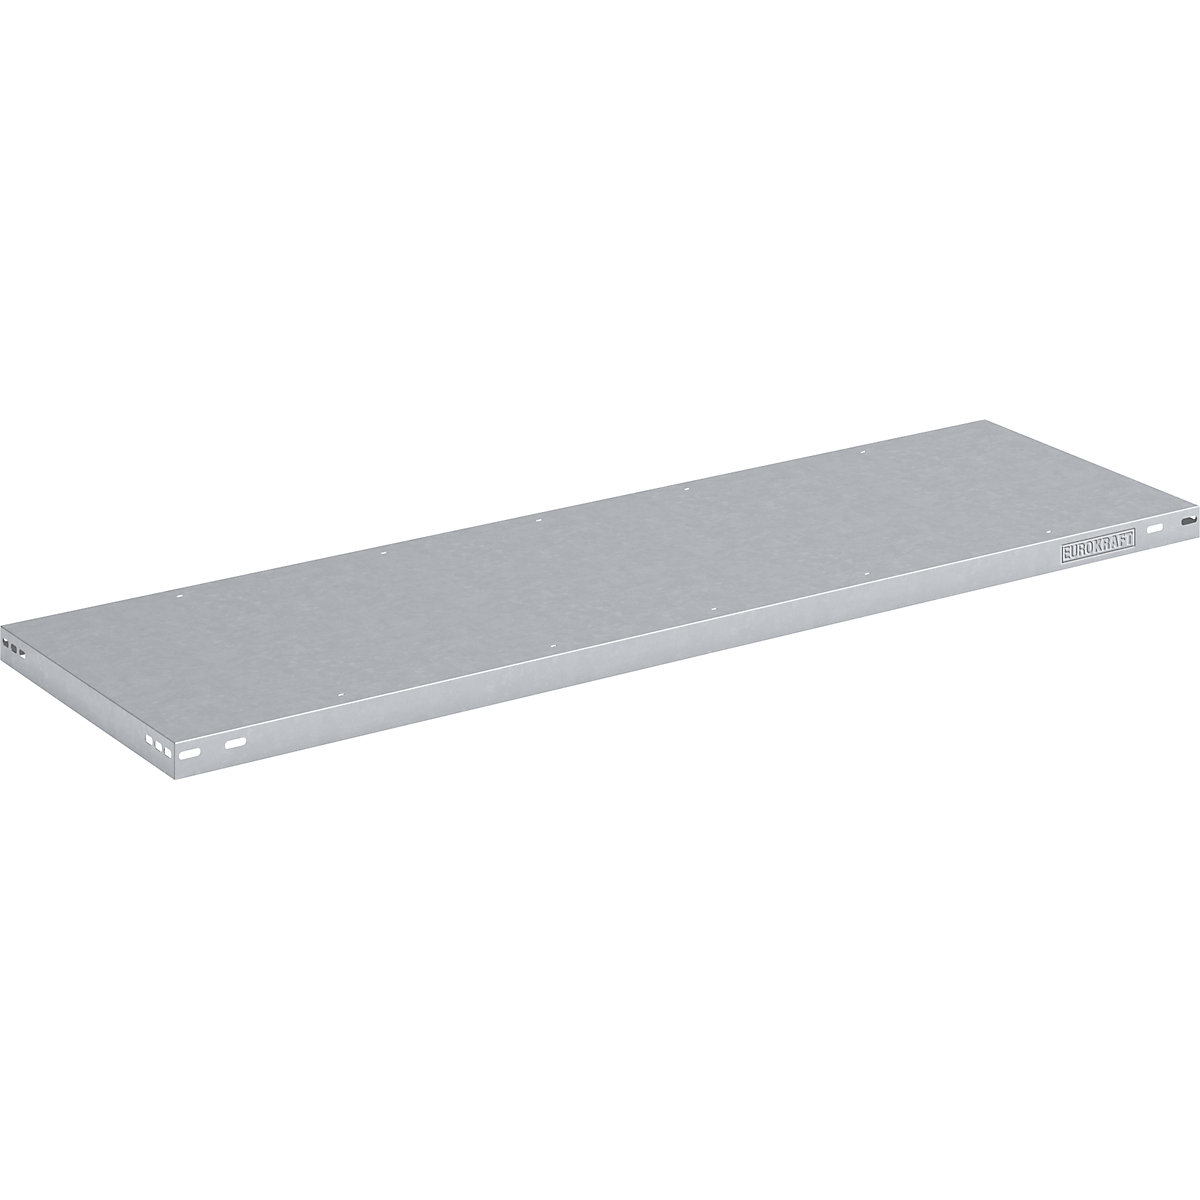 Steel shelf, max. load 125 kg – eurokraft pro, zinc plated, WxD 1300 x 500 mm